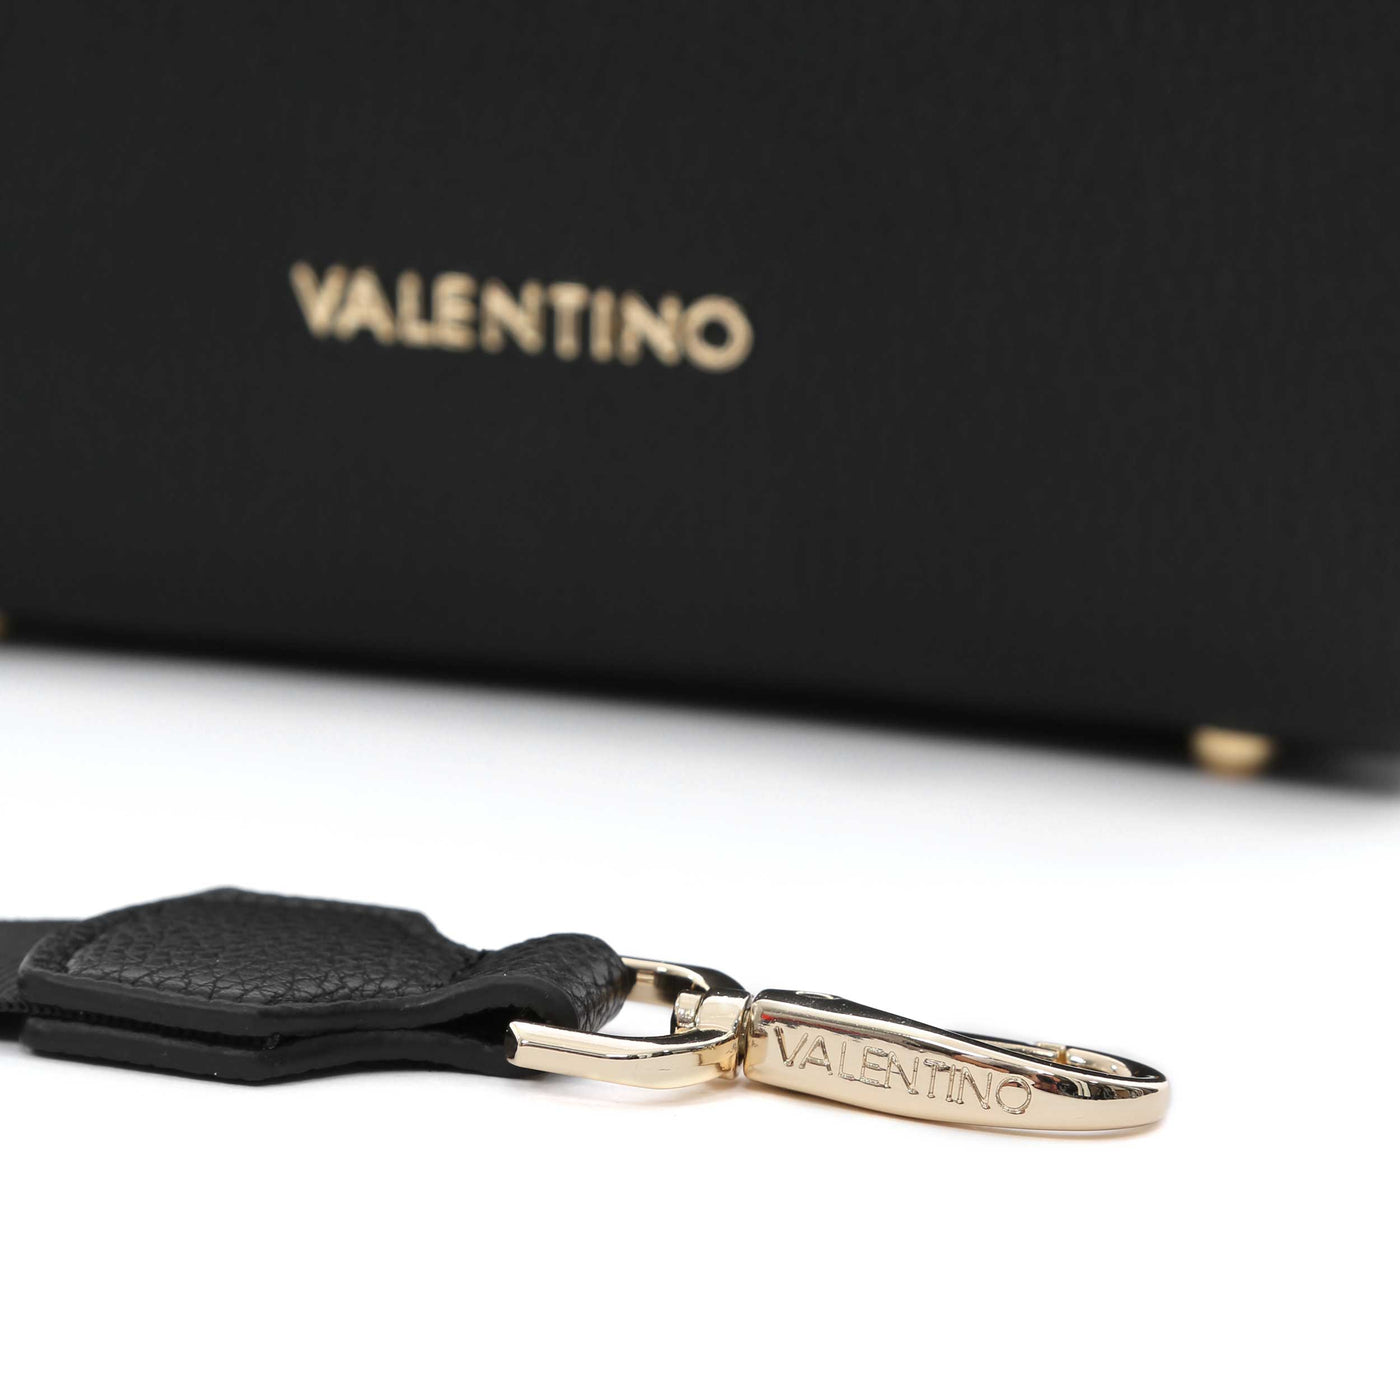 Valentino Bags Pattie Camera Bag in Black